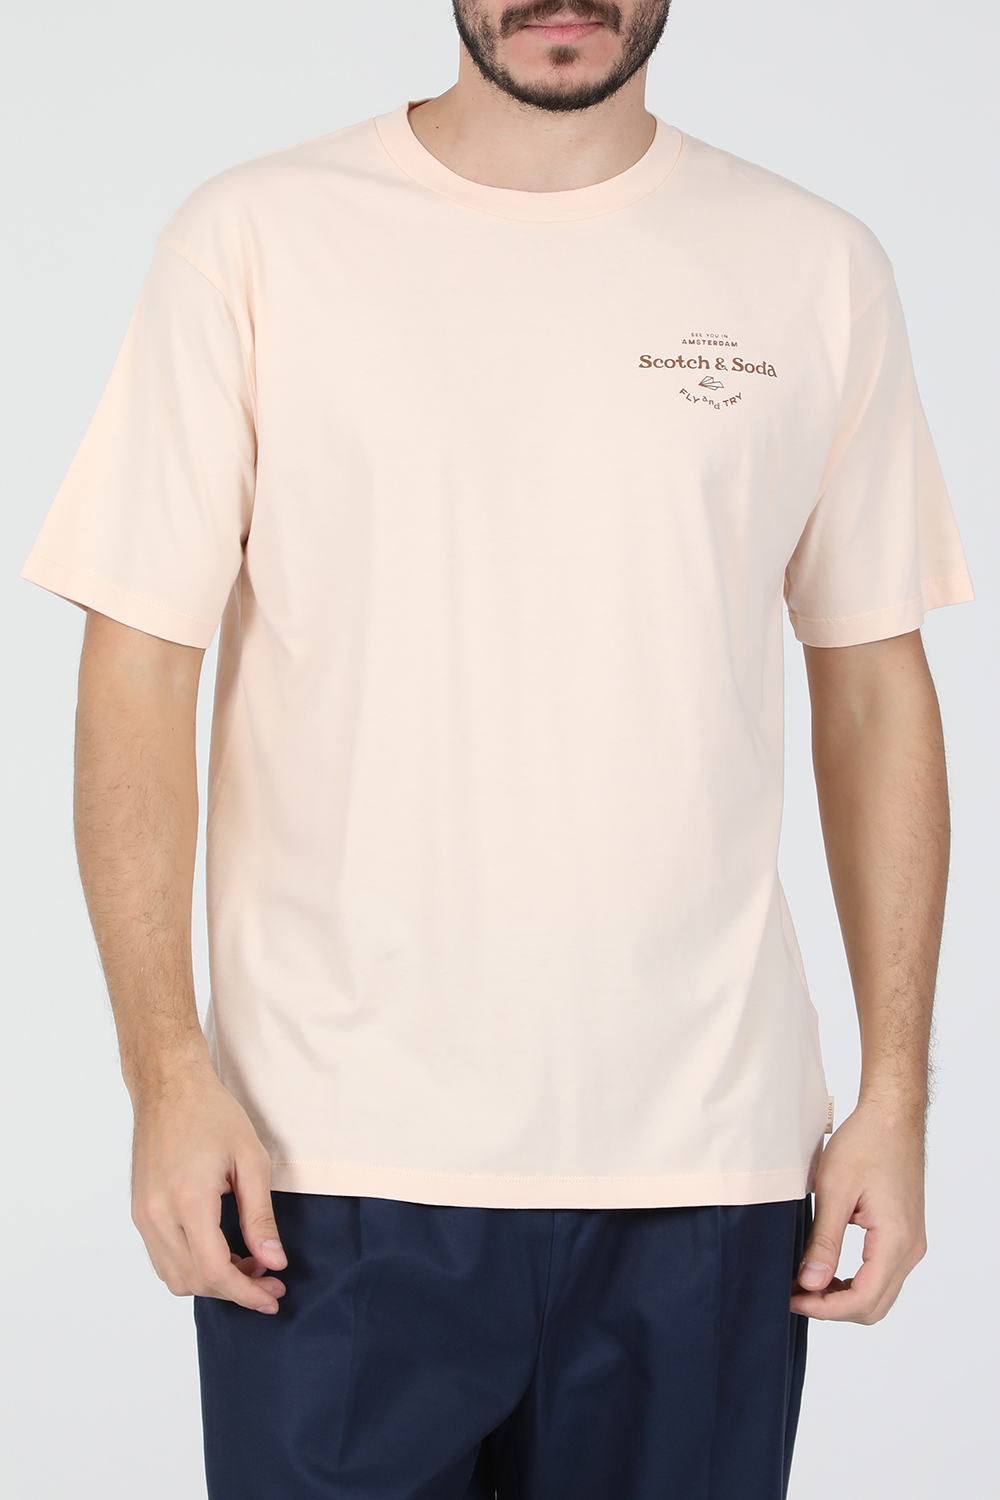 SCOTCH & SODA – Ανδρική κοντομάνικη μπλούζα SCOTCH & SODA ροζ 1821049.0-00P3